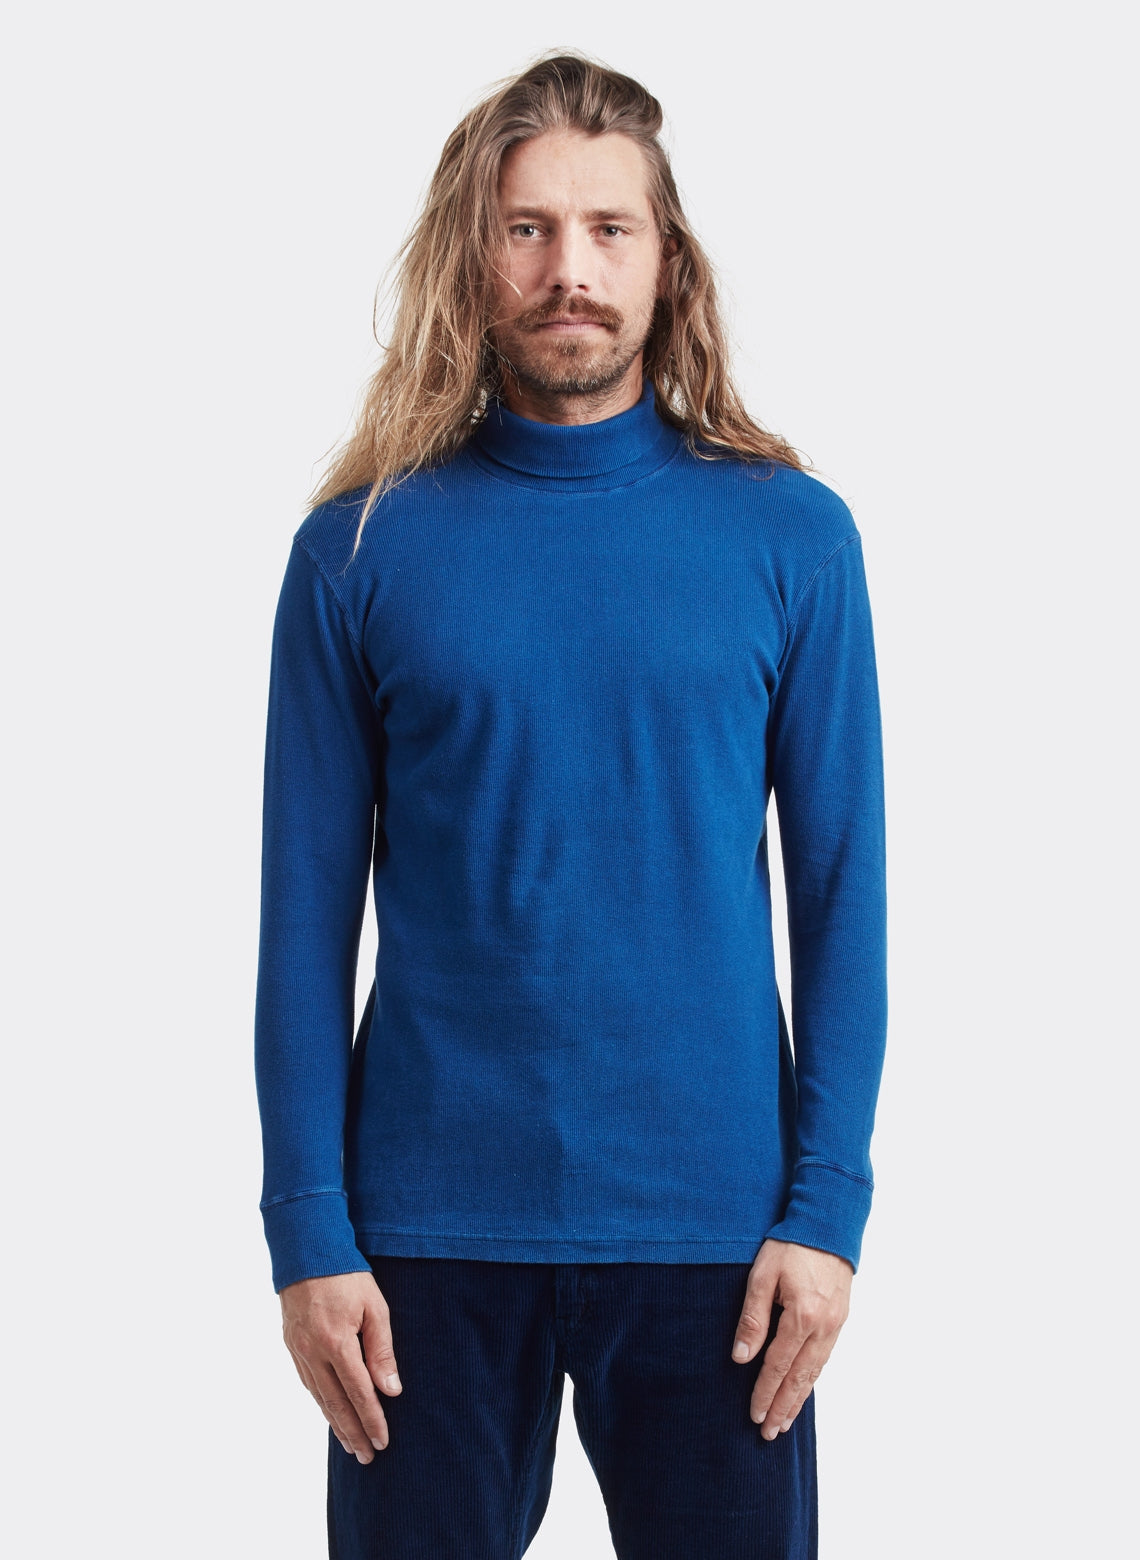 T-Shirt Teint à la Main Manches Longues Blue Indigo